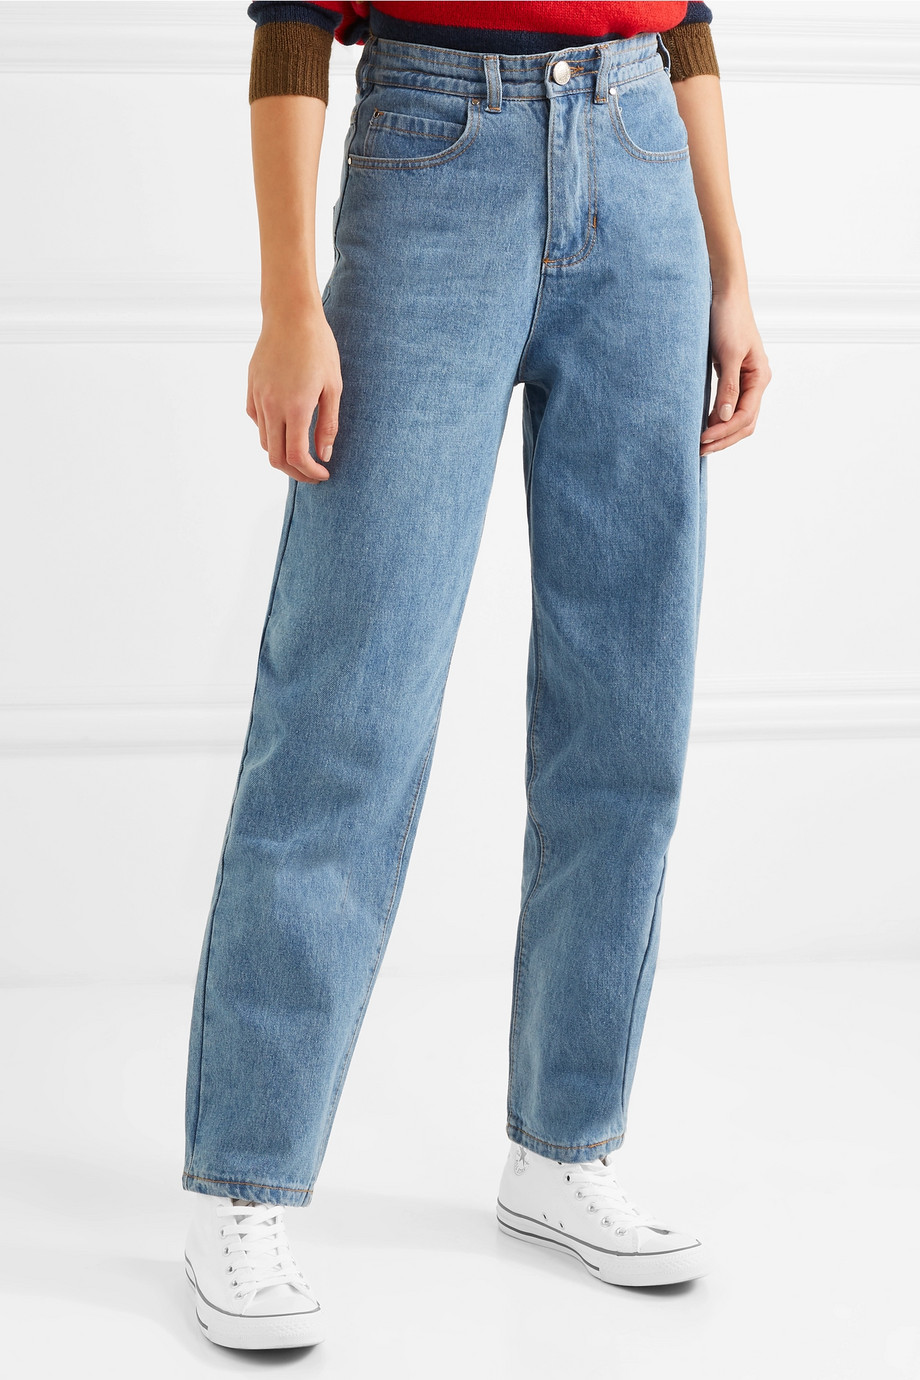 calça jeans moda 2019